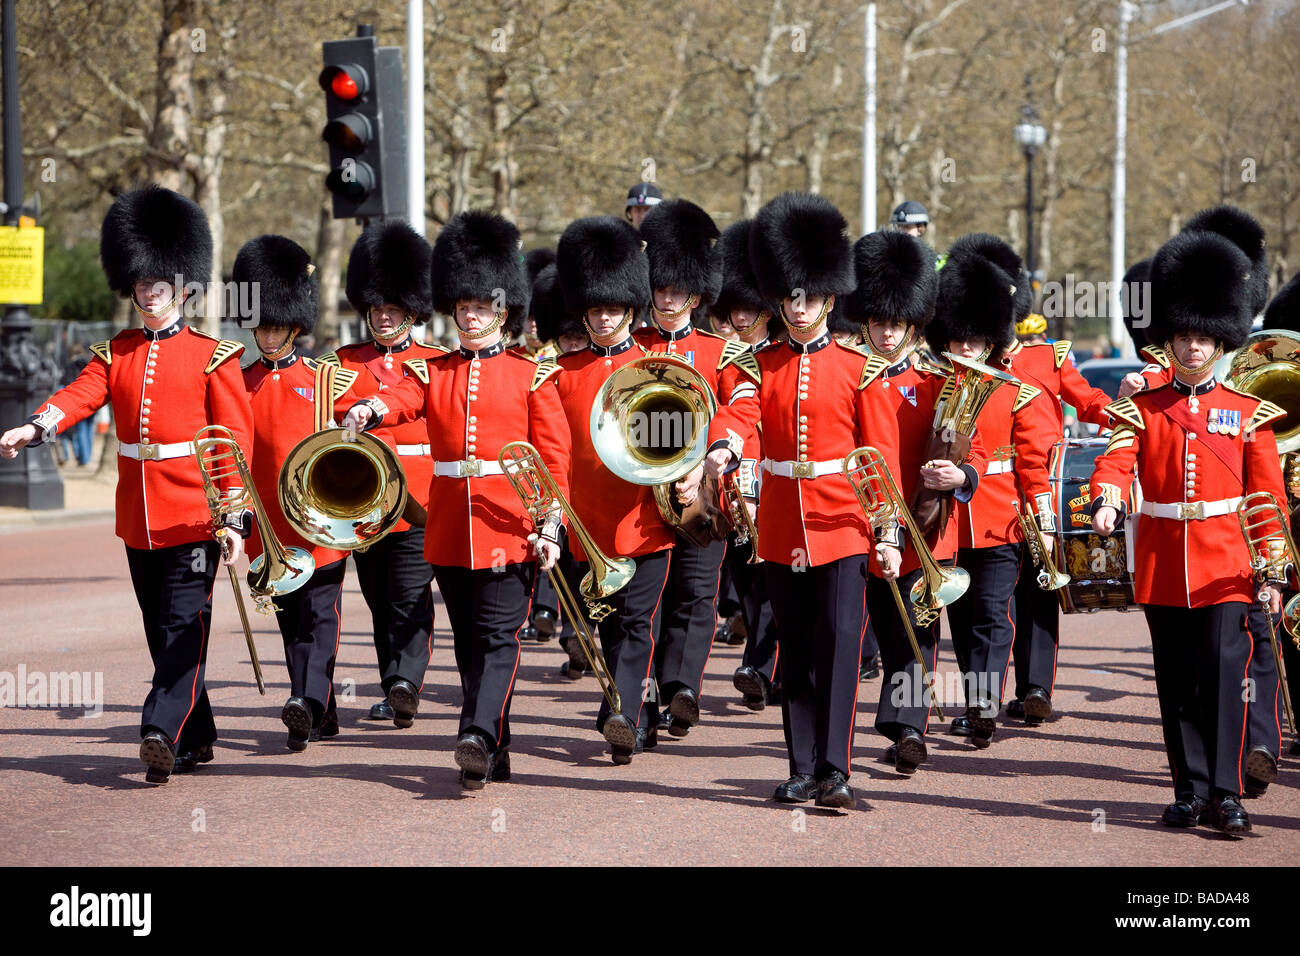 United Kingdom, London, Buckingham Palace, changing of the guard Stock Photo